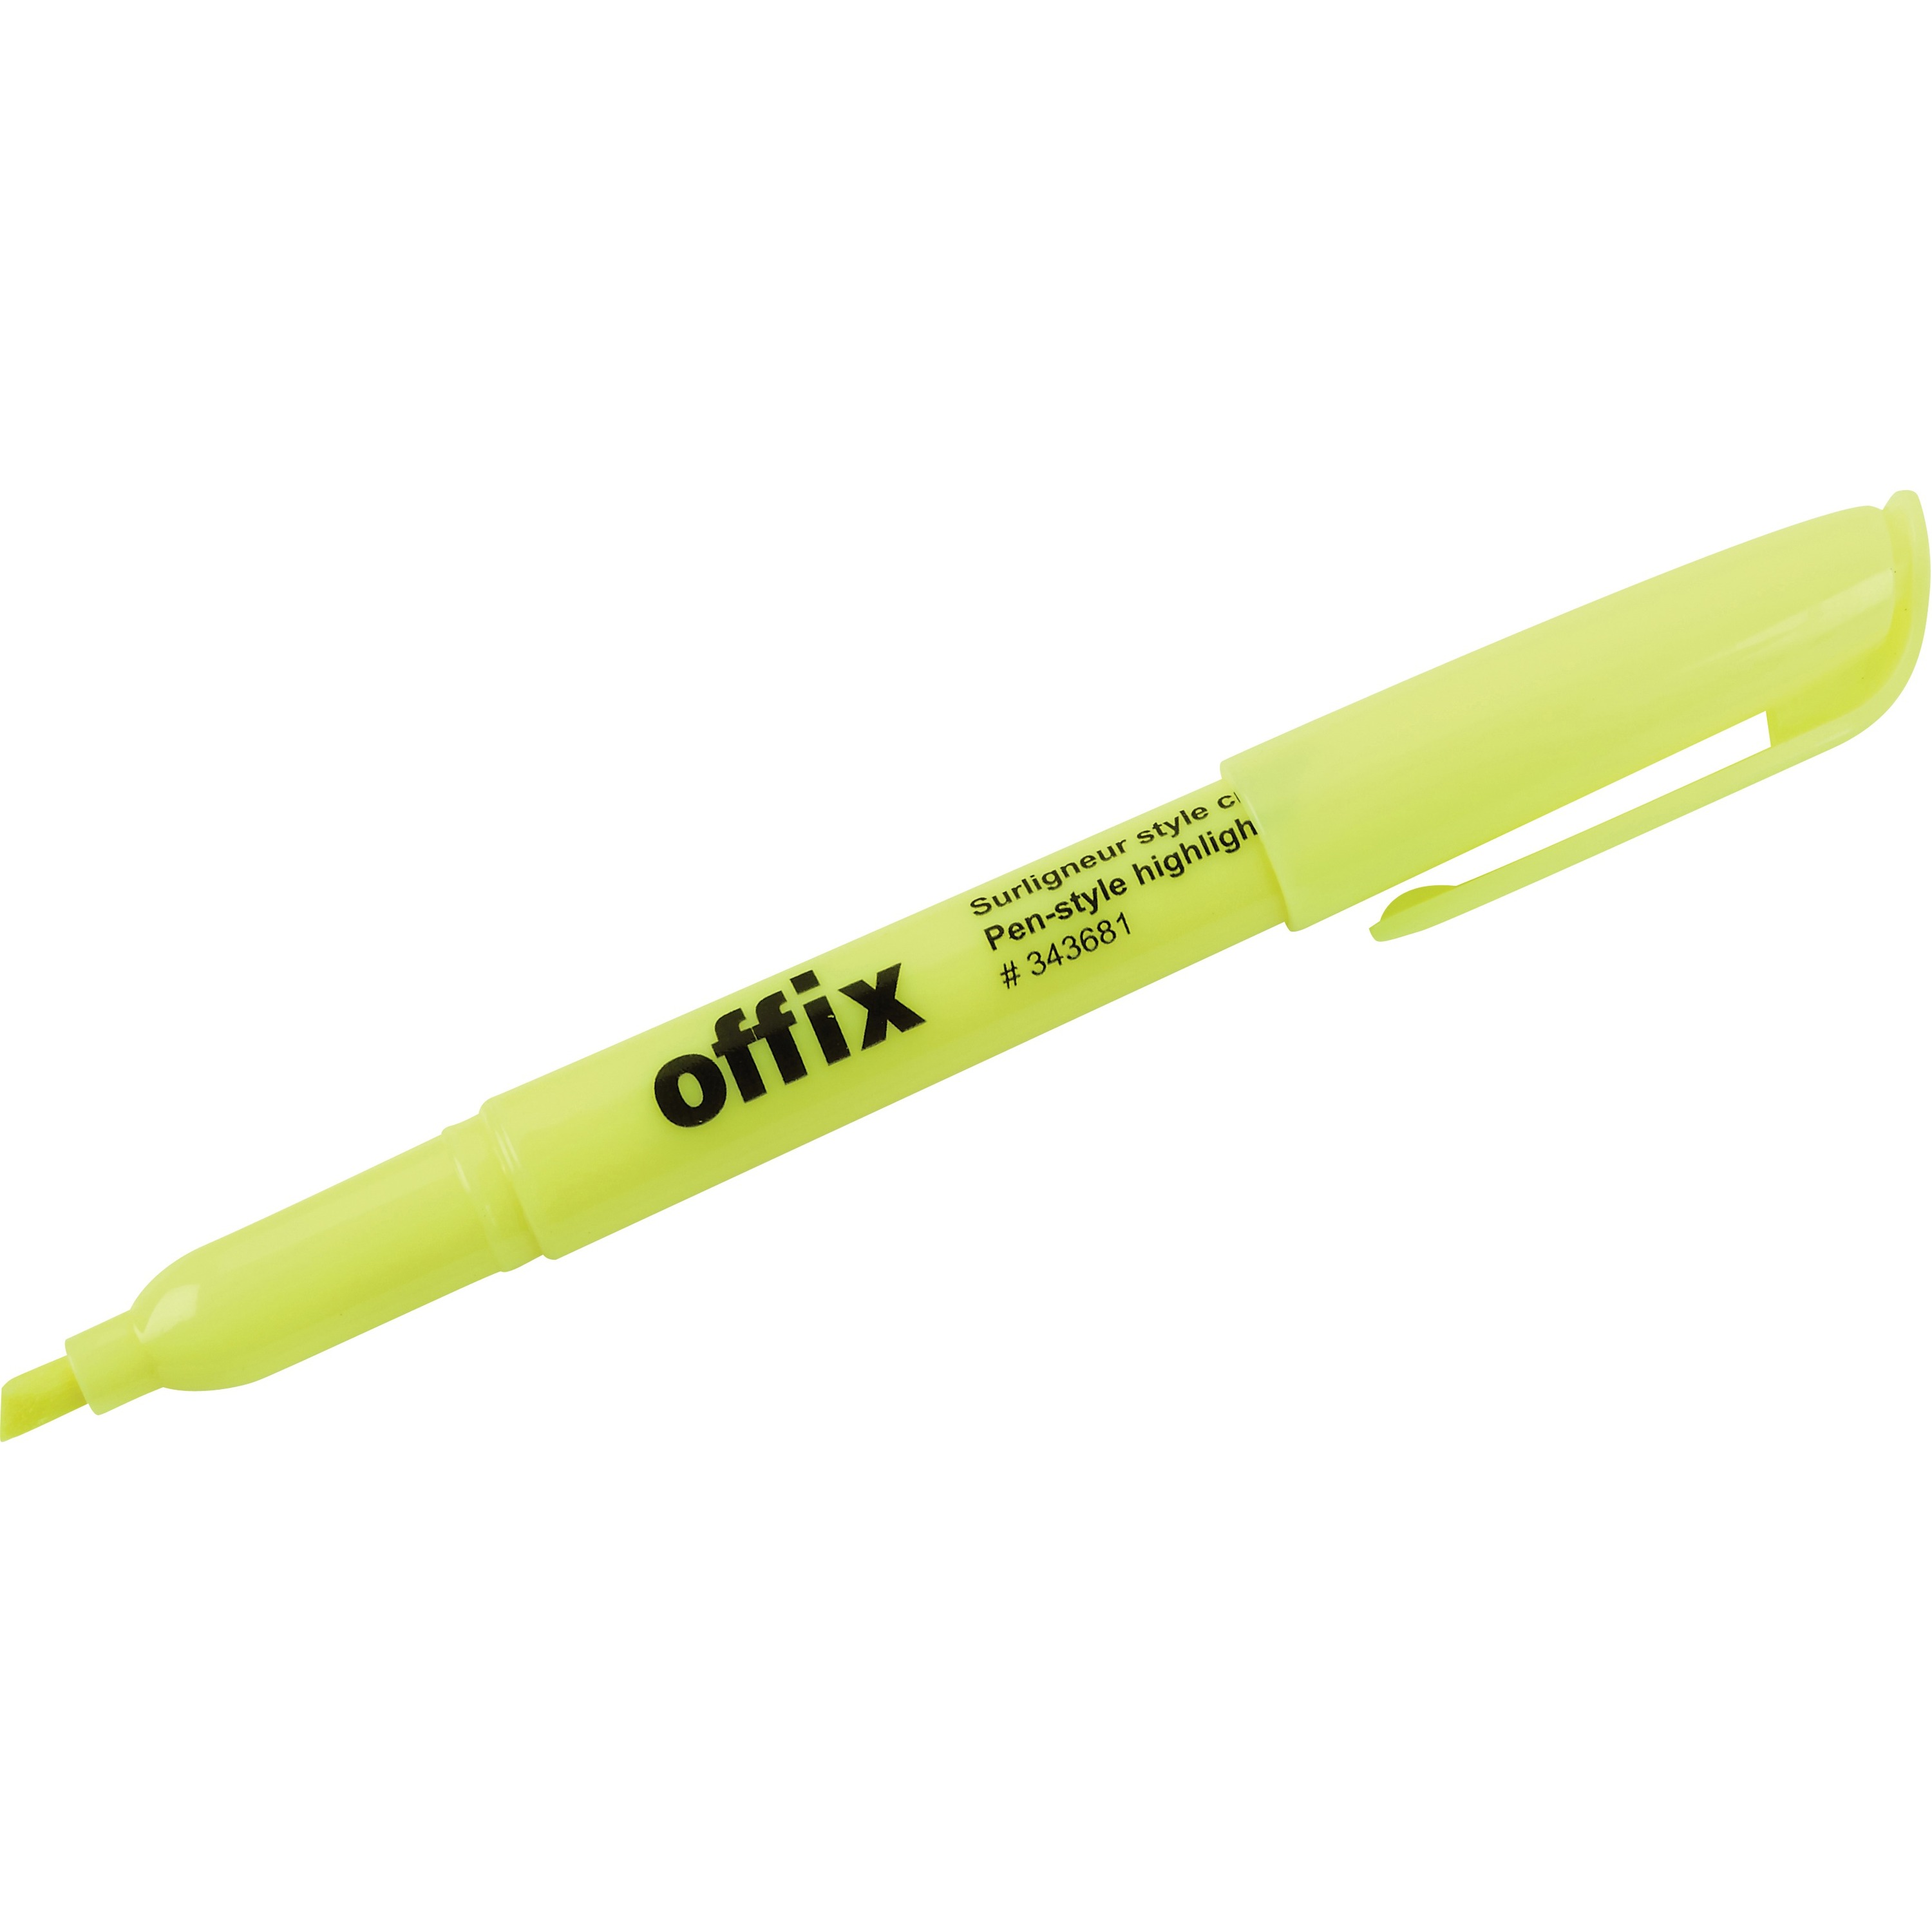 Offix Highlighter Set - Pen Style Style - Yellow - 1 Dozen